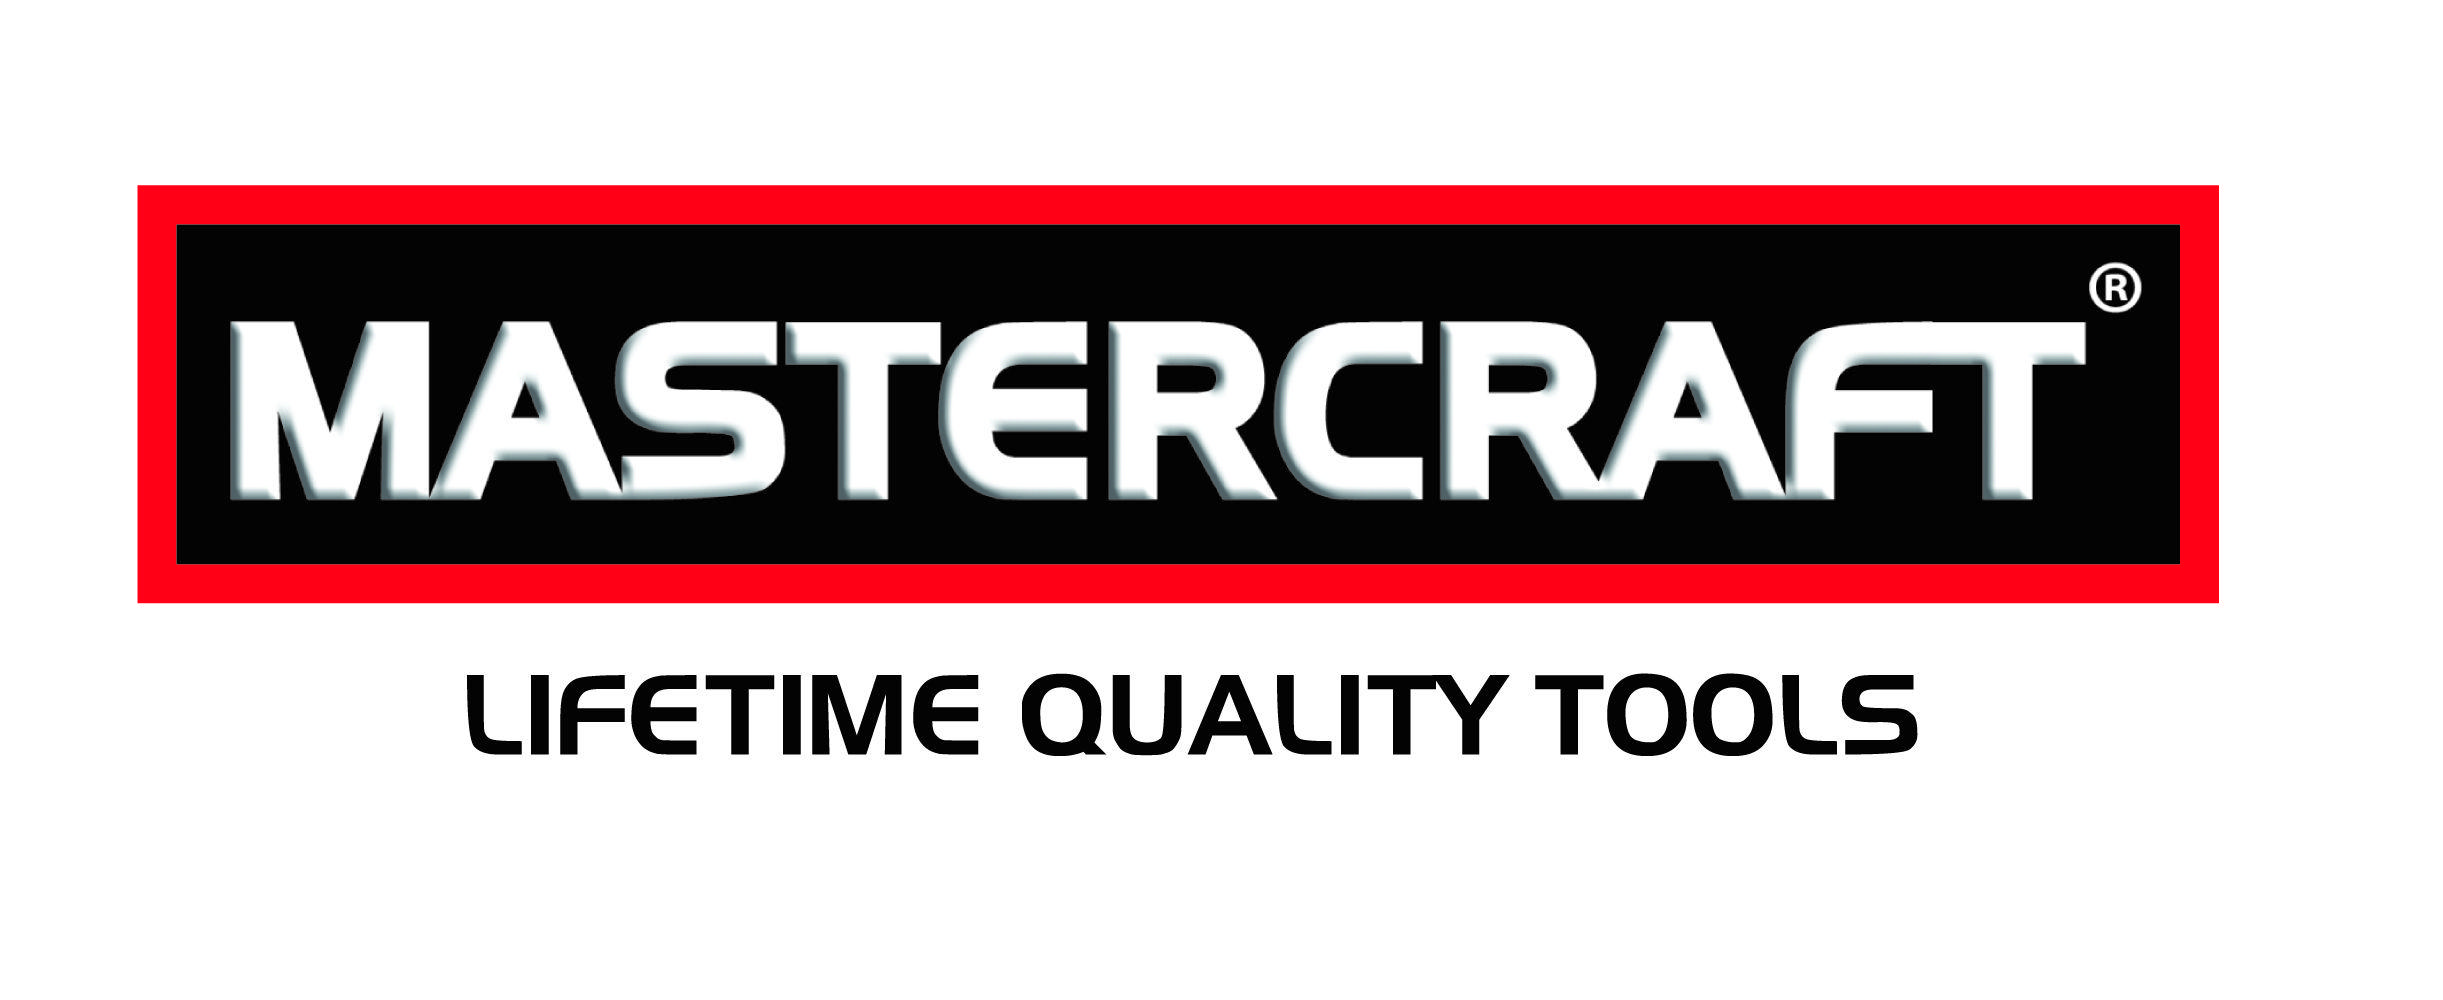 Master Craft Logo - File:NEW MASTERCRAFT LOGO.jpg - Wikimedia Commons